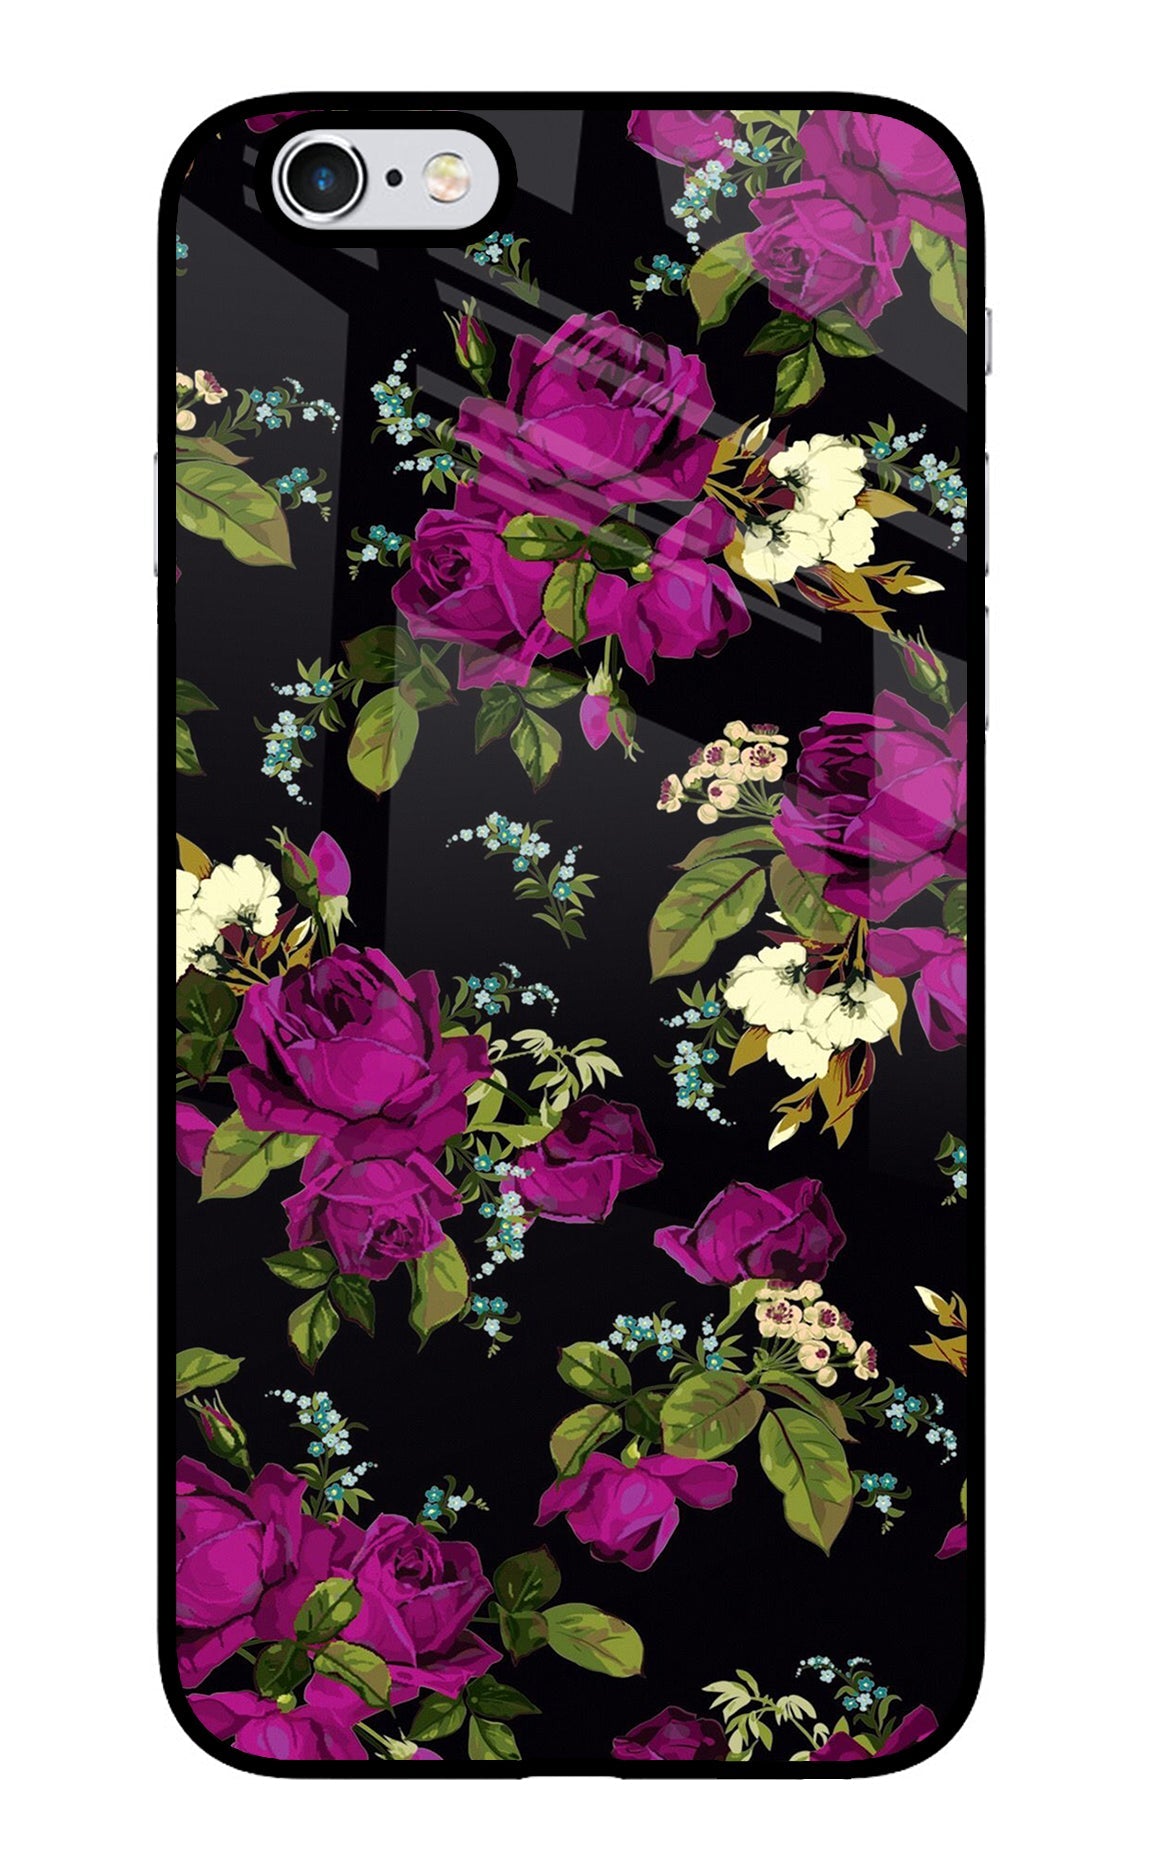 Flowers iPhone 6 Plus/6s Plus Glass Case